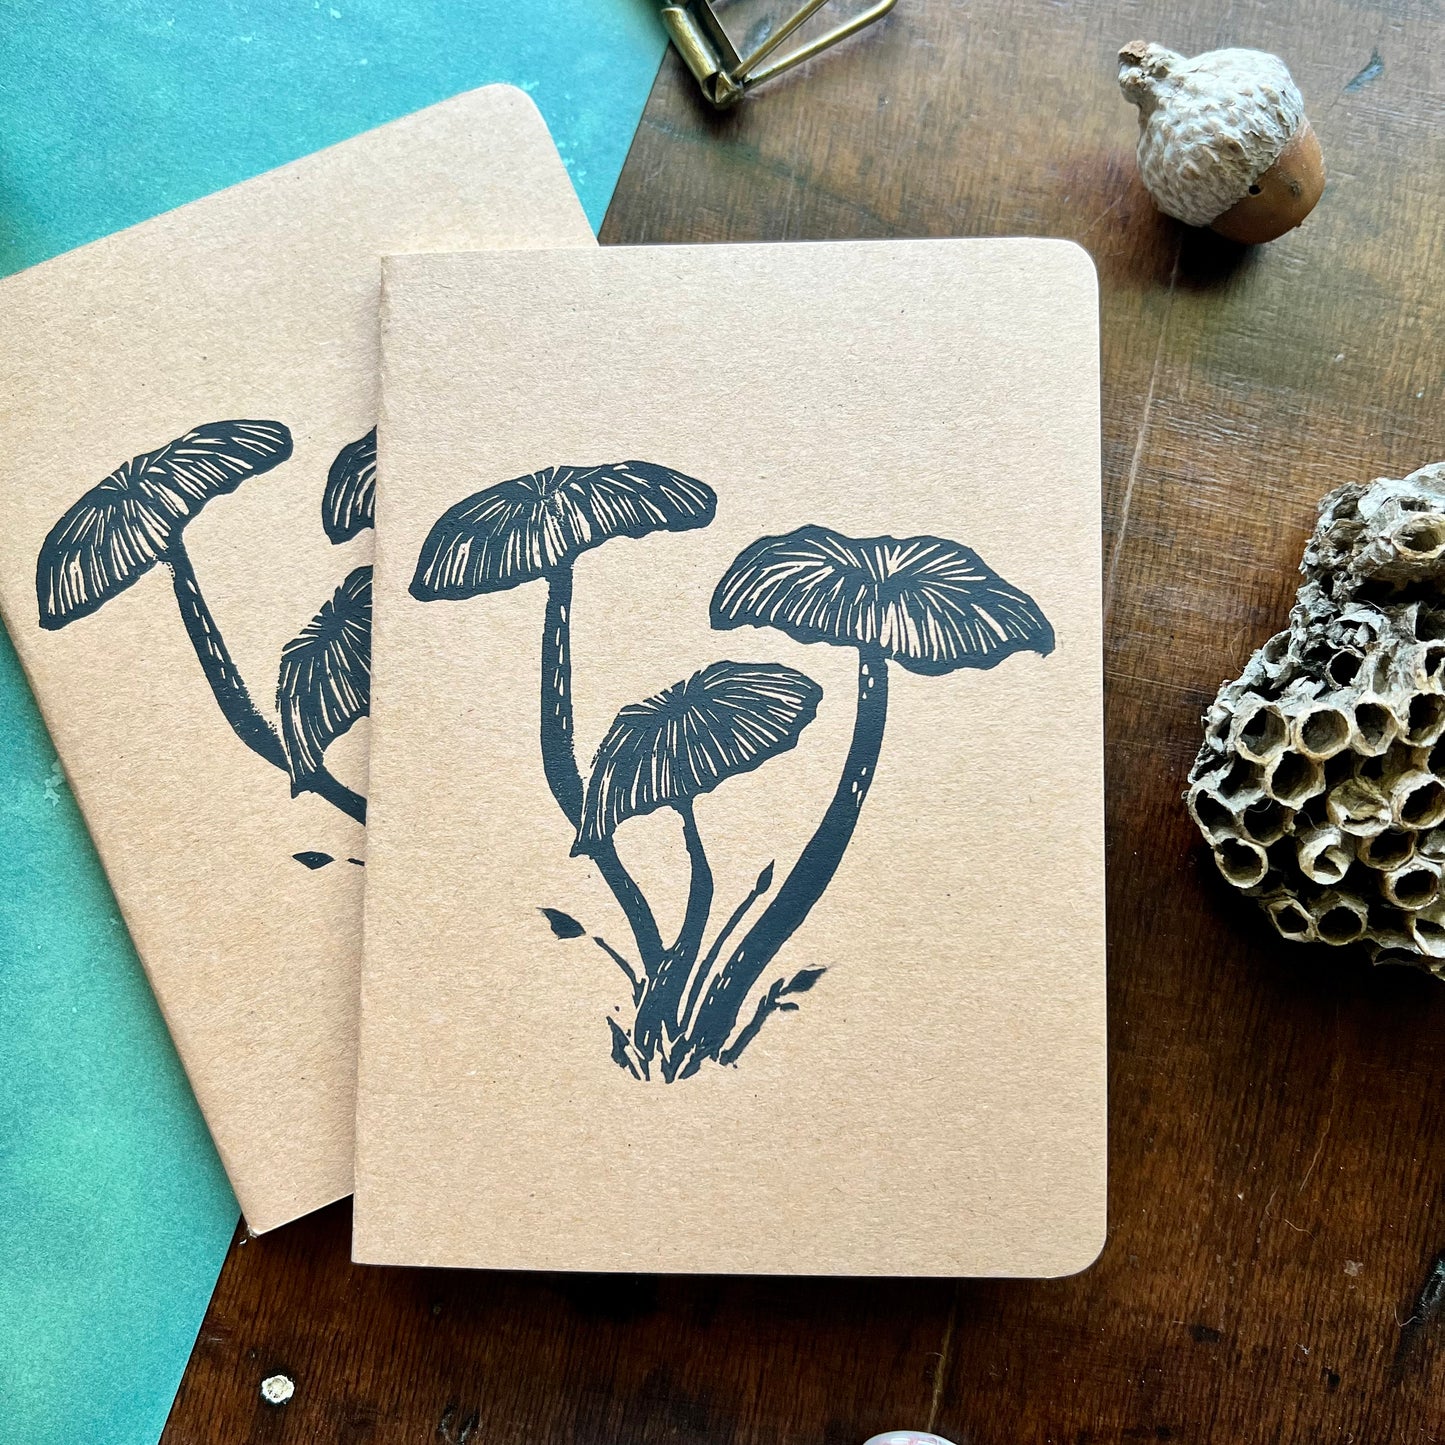 Pixie Cap Mushrooms Handprinted Notebook